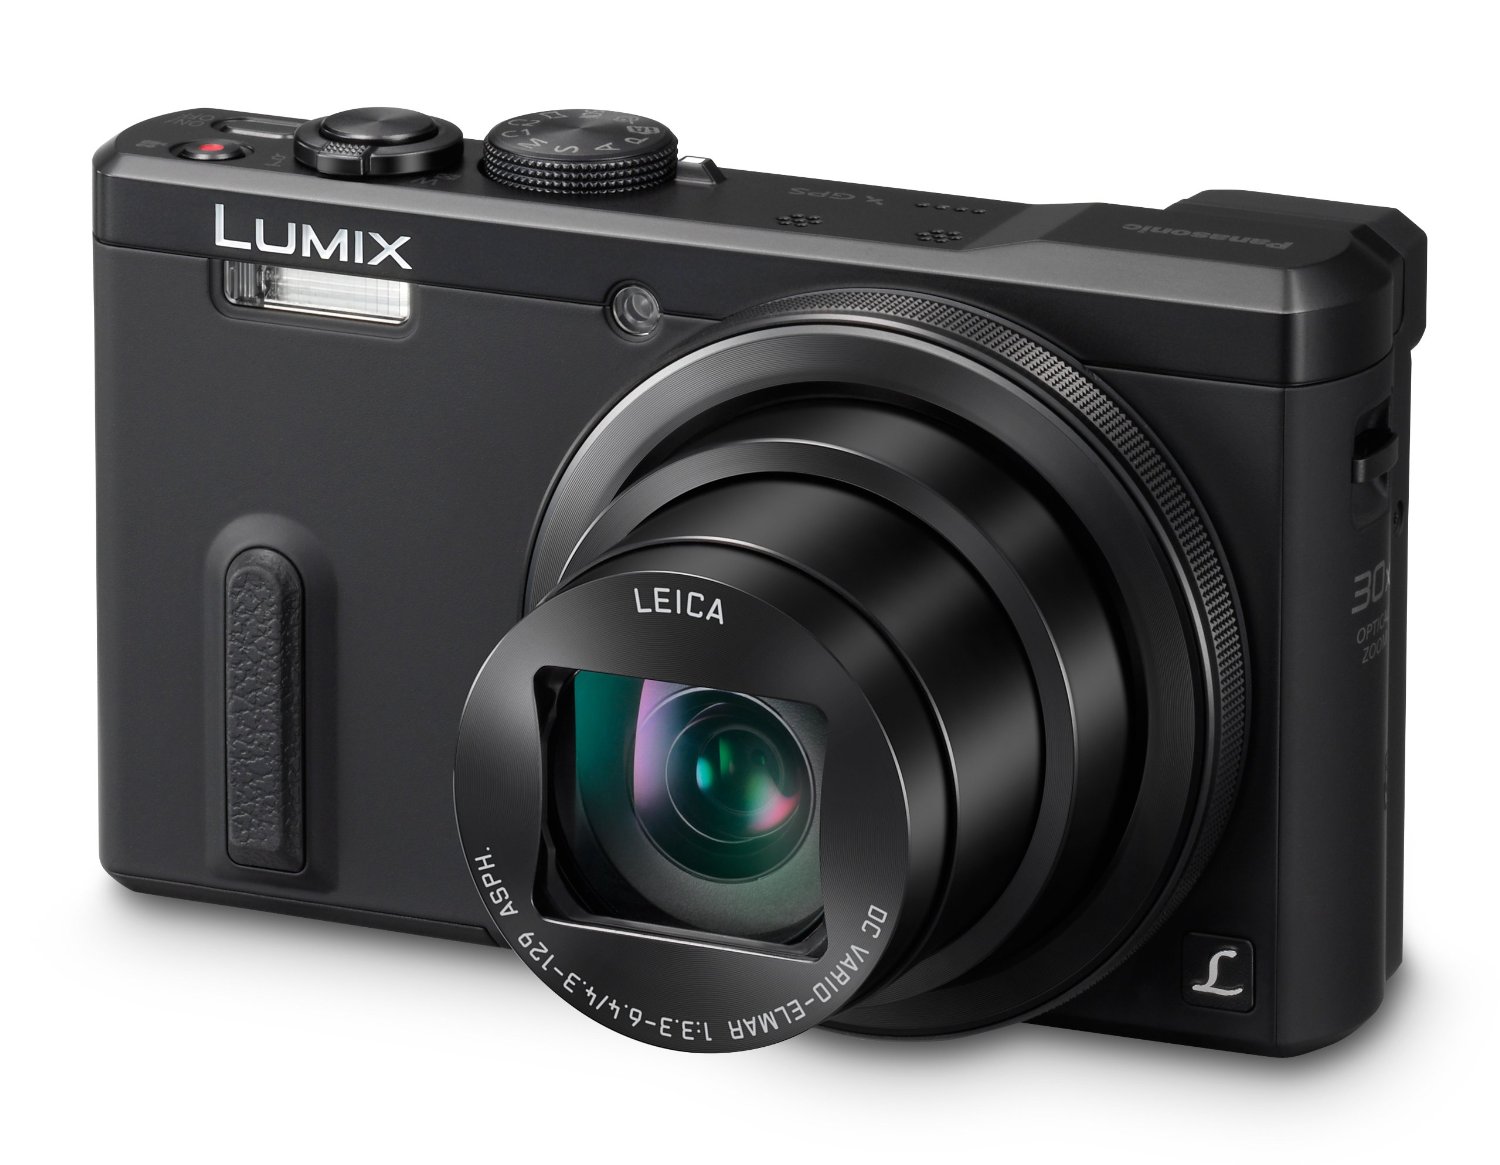 Panasonic Lumix DMC-TZ60EB-K Compact Digital Camera – Black (18.1MP, 30x Optical Zoom, High Sensitivity MOS Sensor) 3 inch LCD (New for 2014)